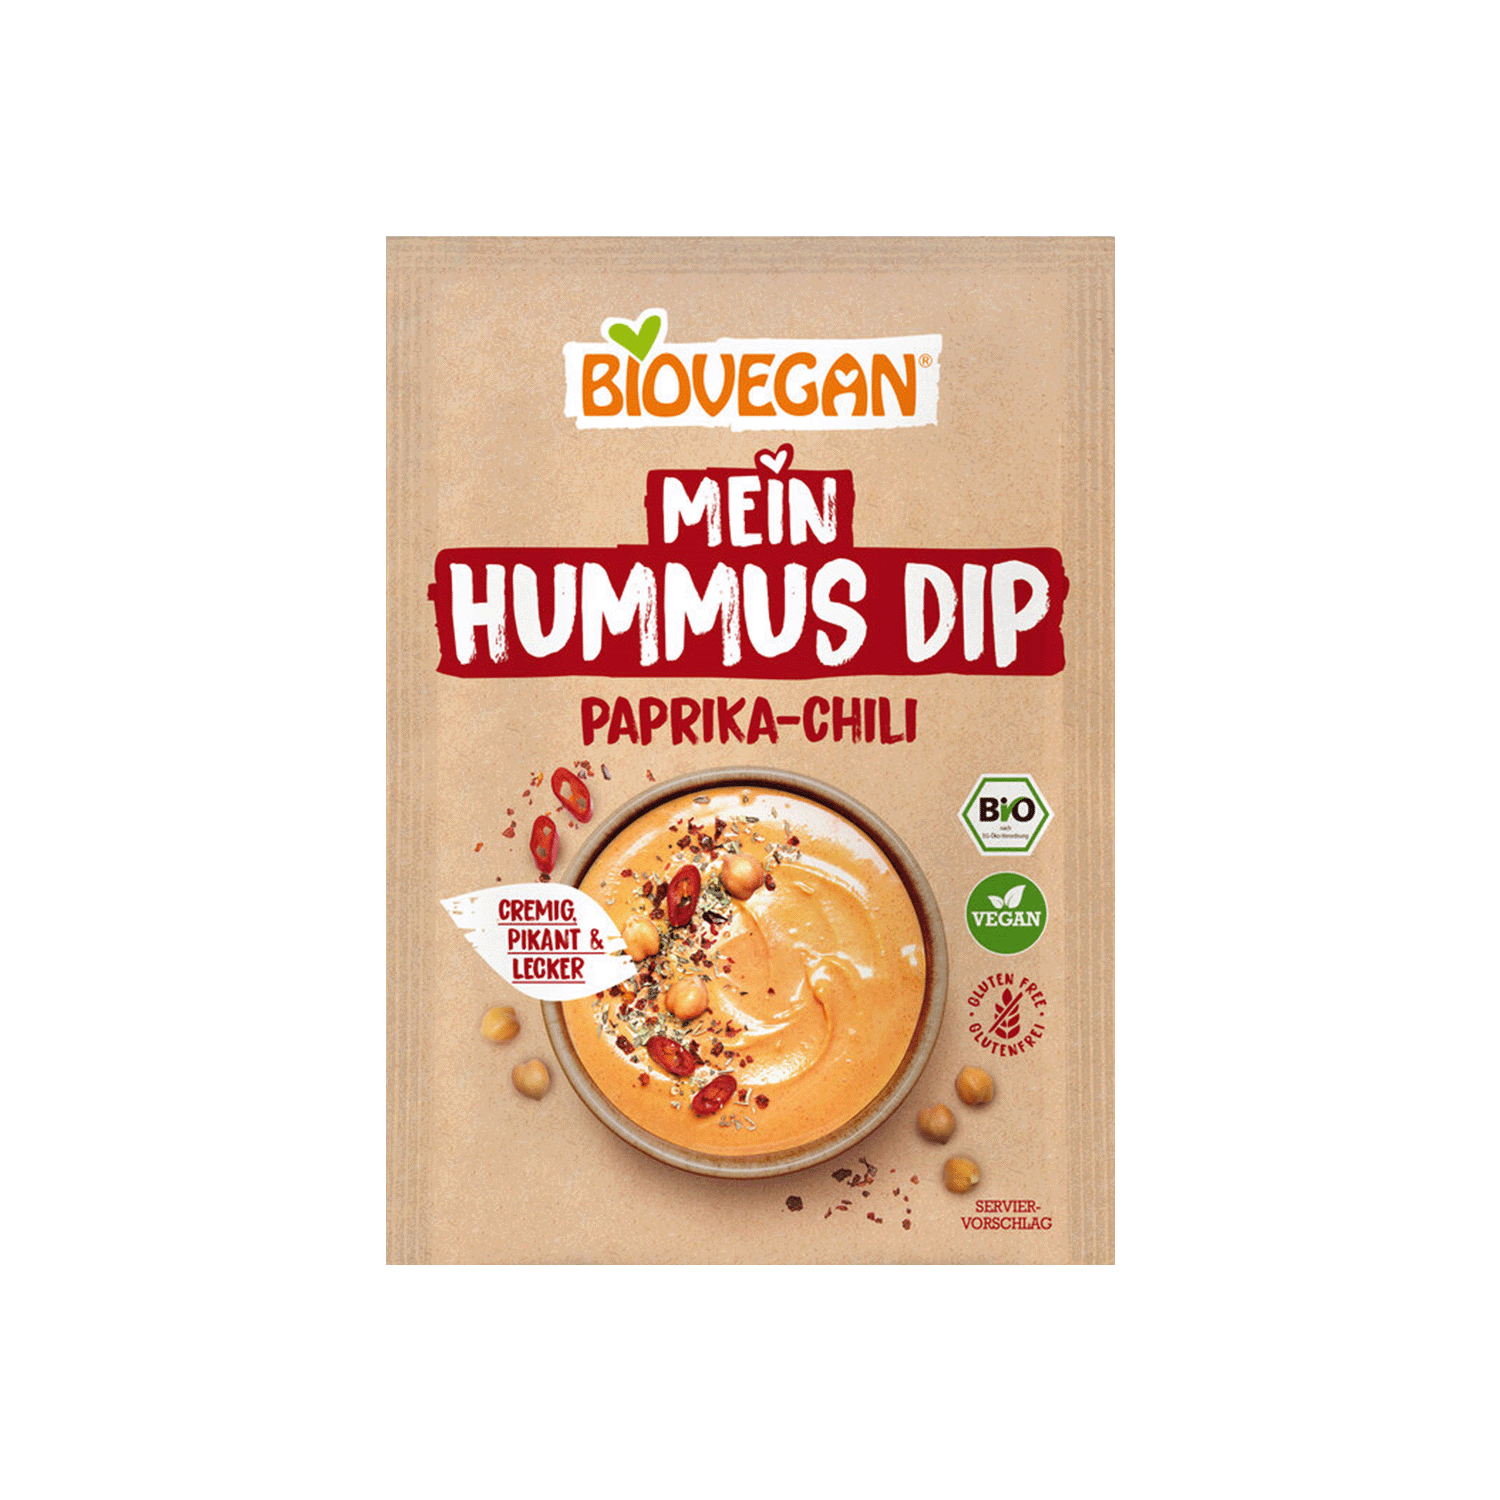 My Hummus Dip Paprika-Chili, Organic, 55g